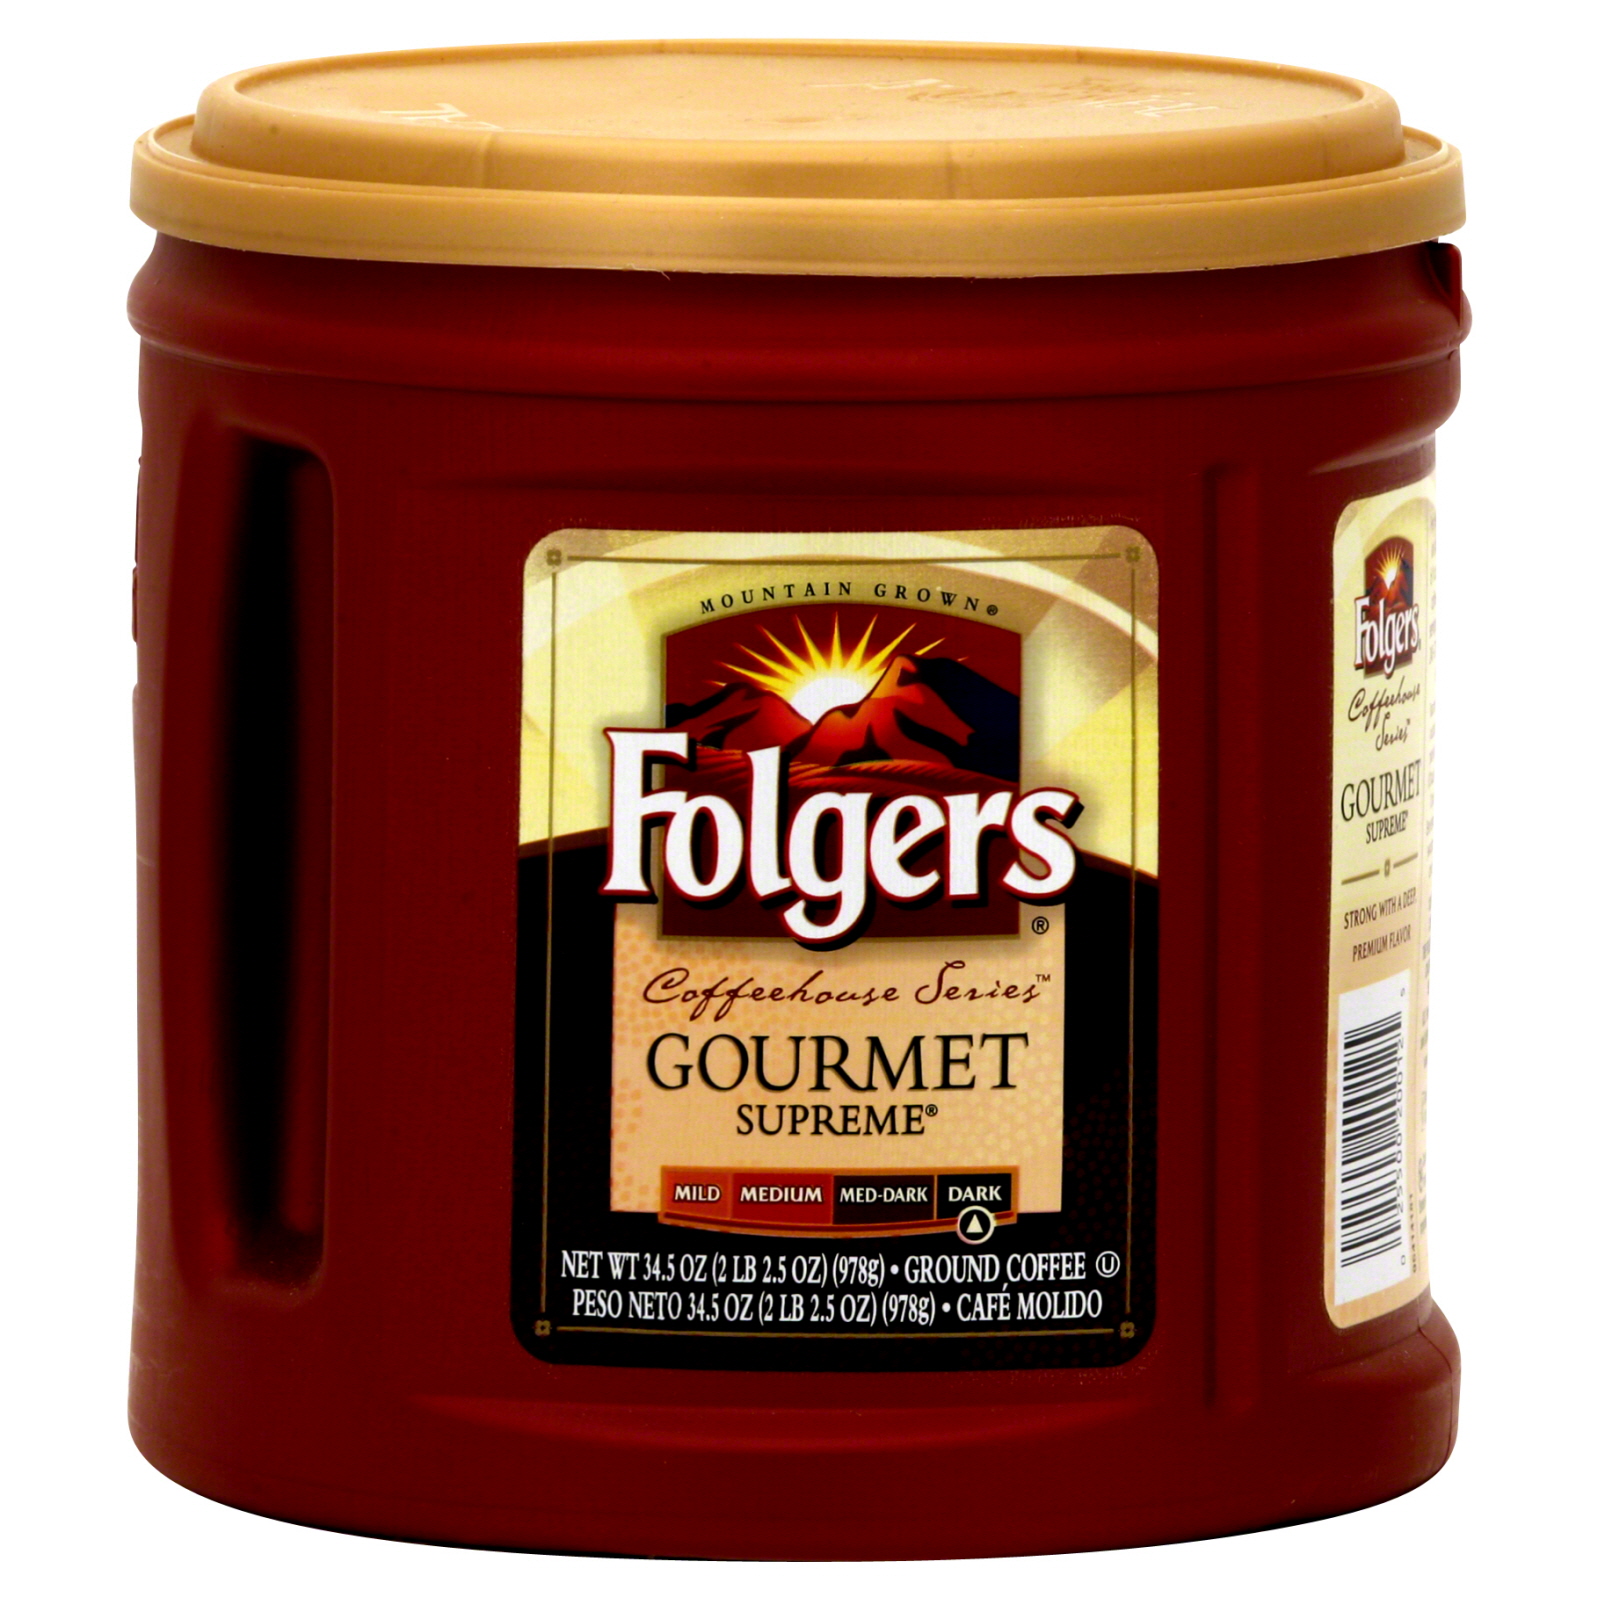 Folgers Coffeehouse Series Coffee, Ground, Gourmet Supreme, Dark, 34.5 oz (2 lb 2.5 oz) (978 g)